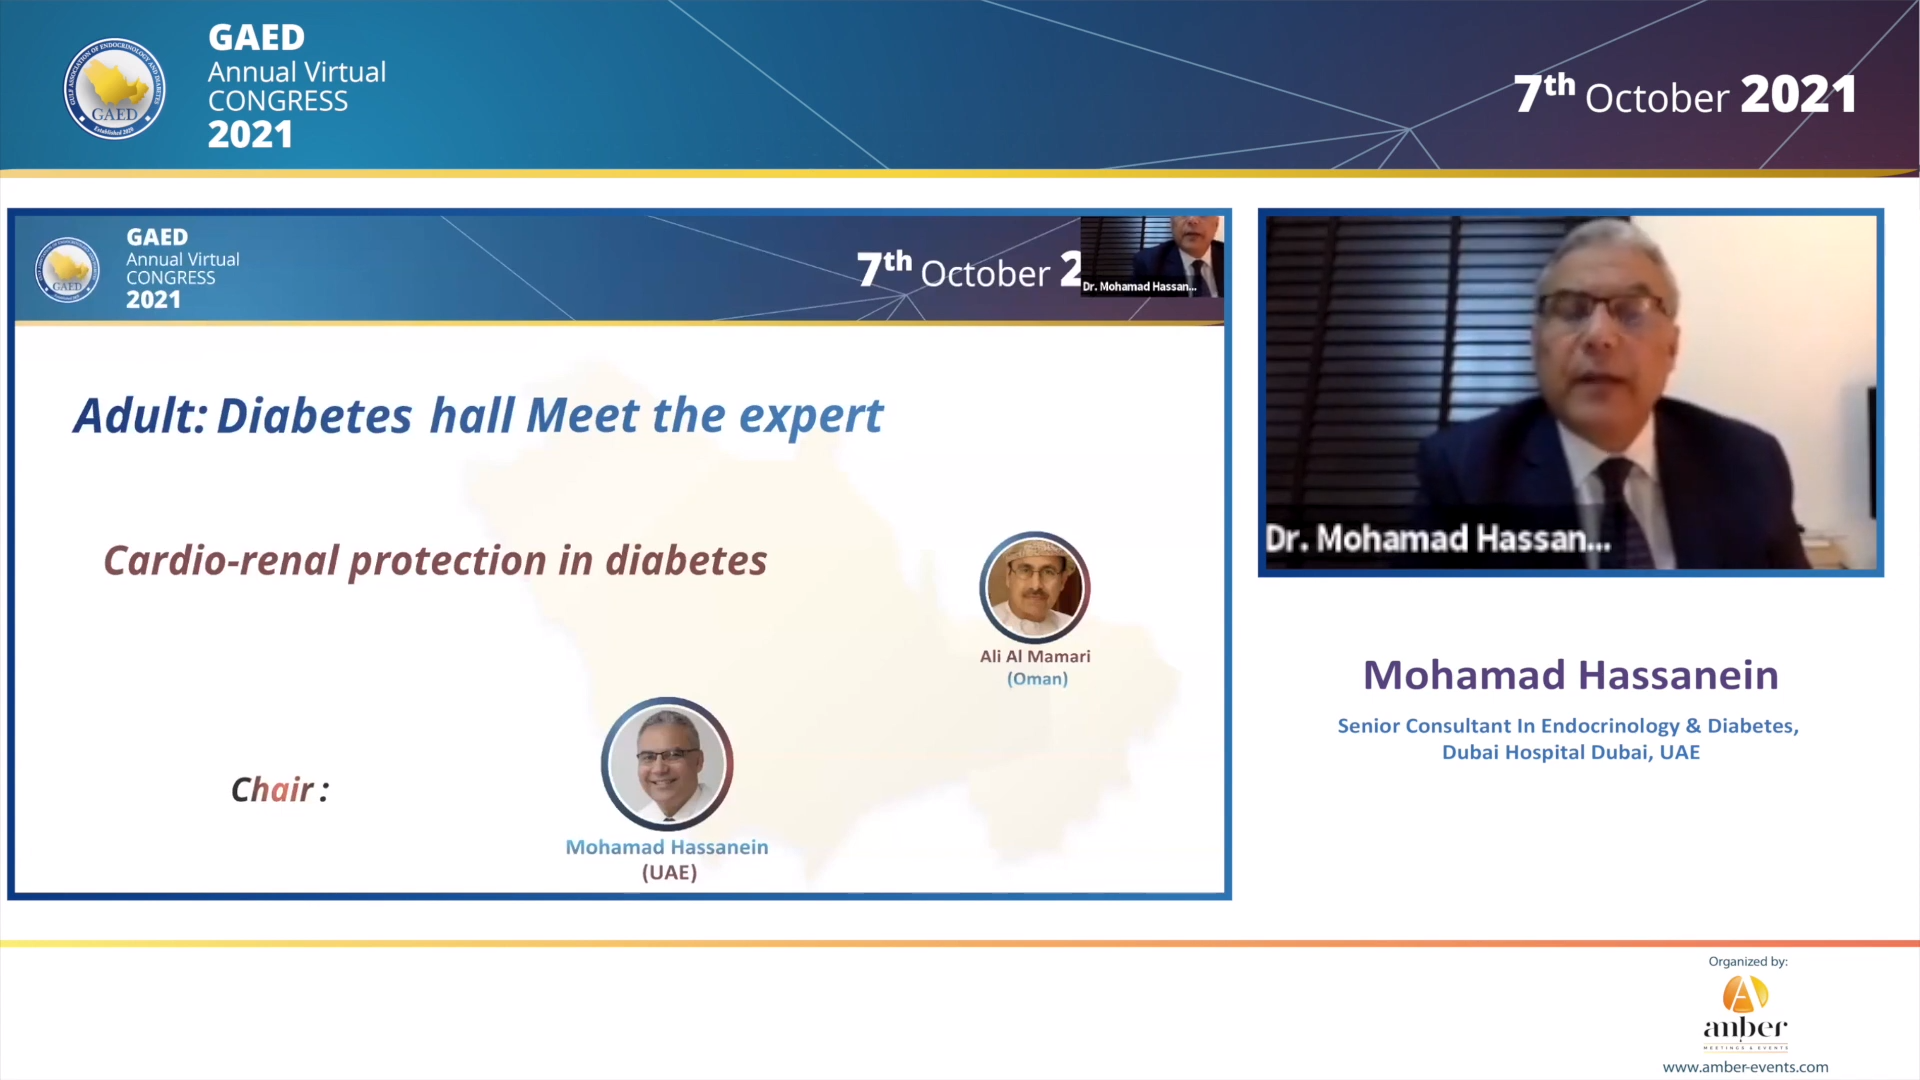 7.10.21 - Day 1, Adult - Diabetes hall Meet the expert